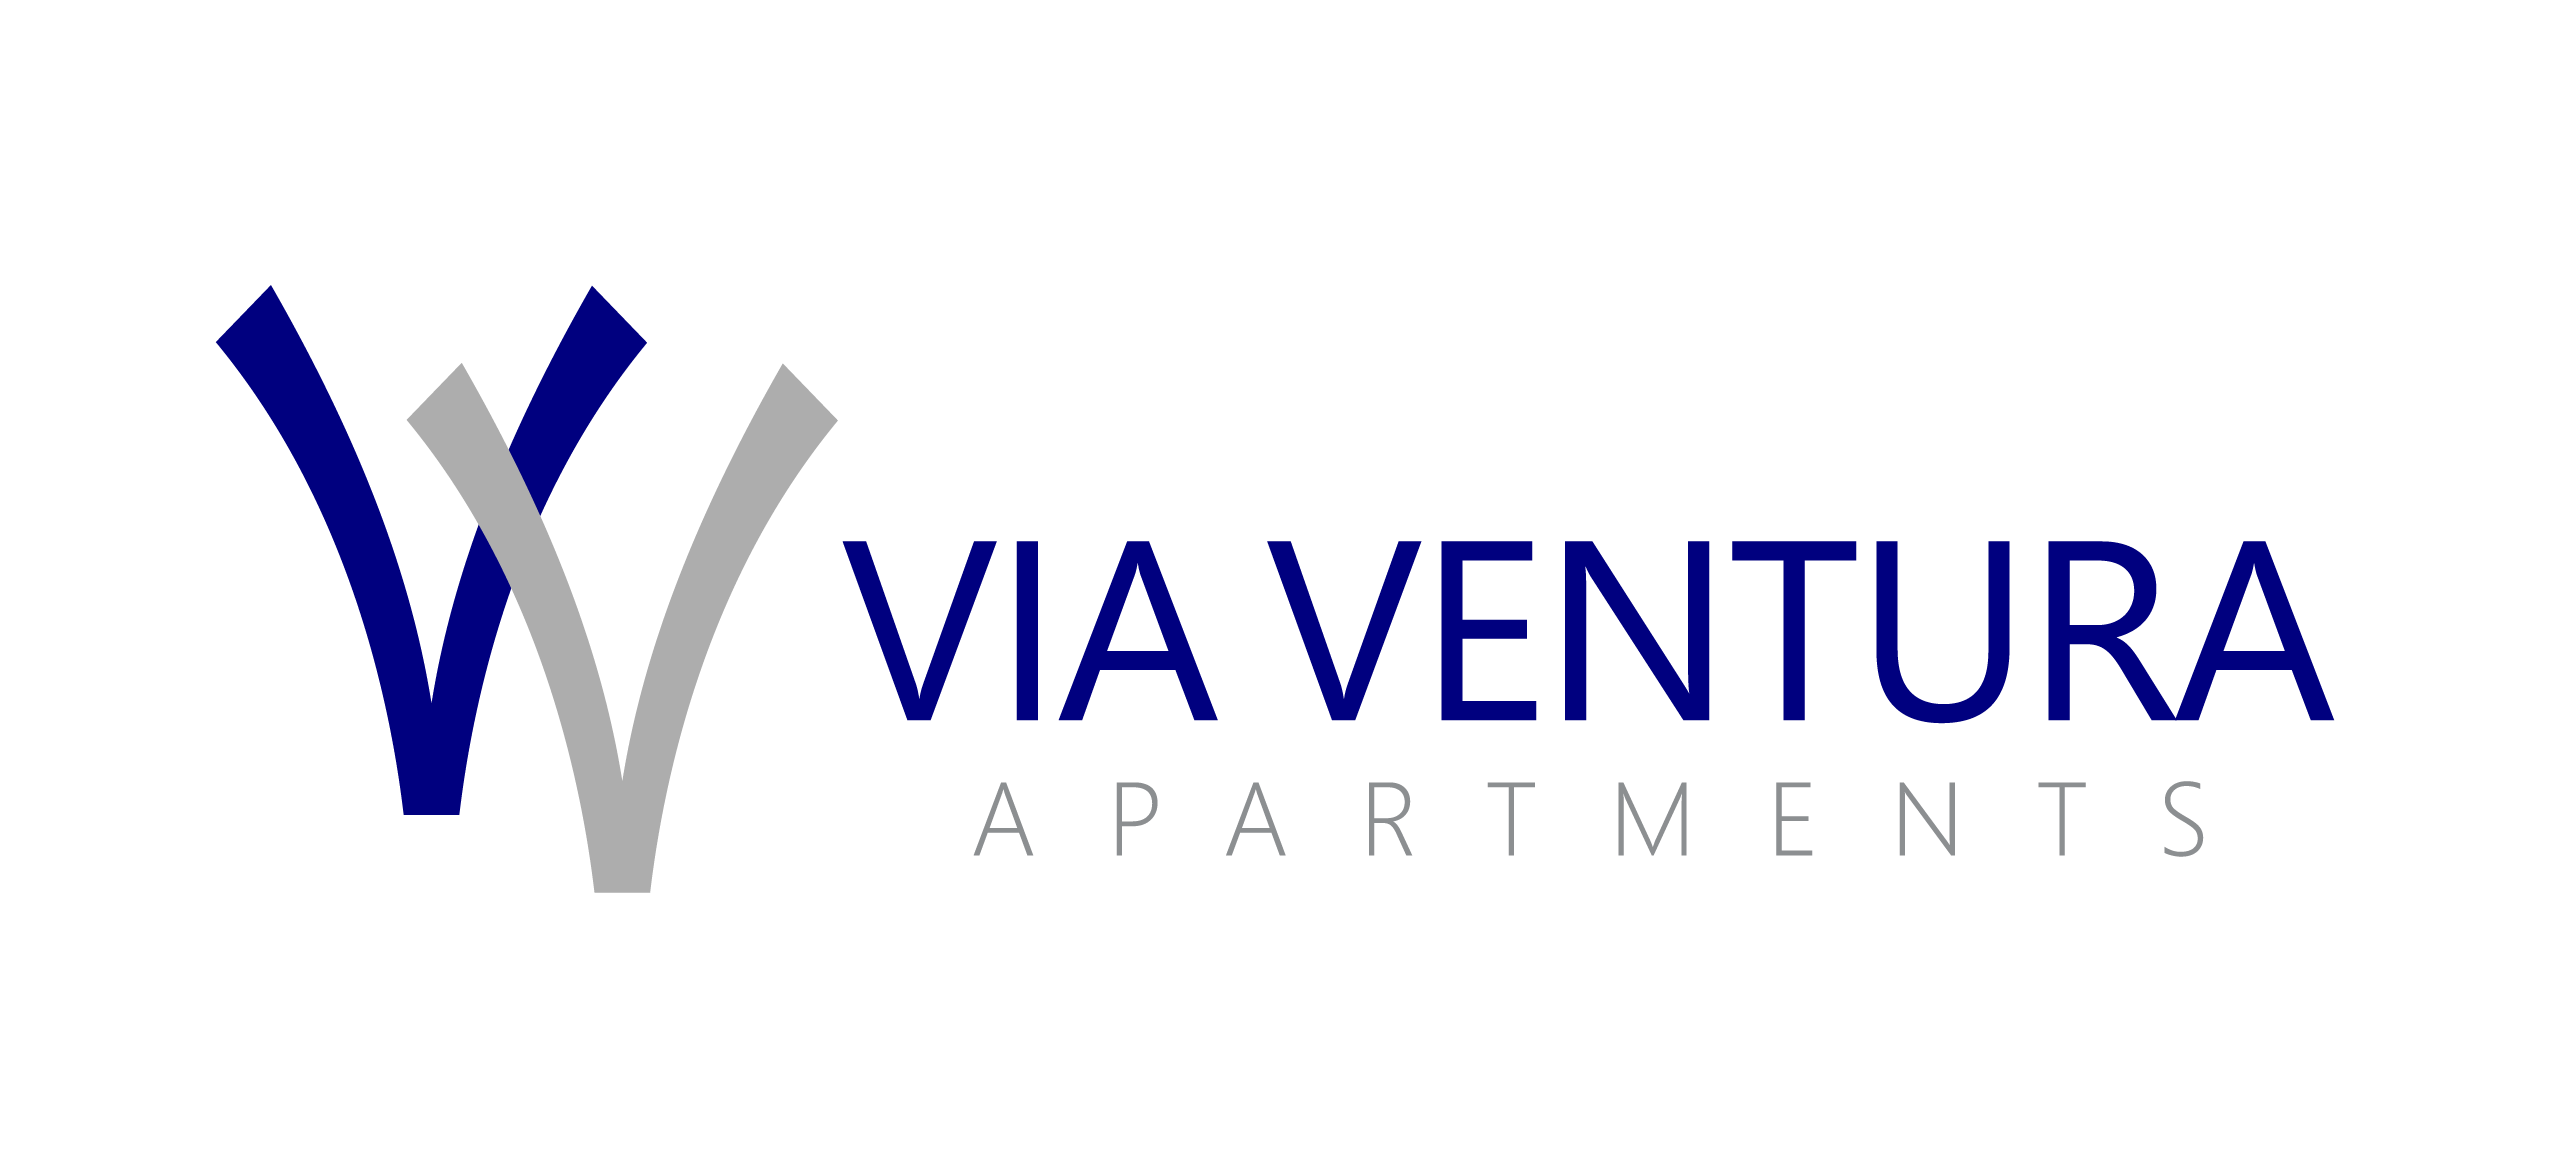 Ventura Logo - Via Ventura Apartments | Apartments in Ventura, CA 93003